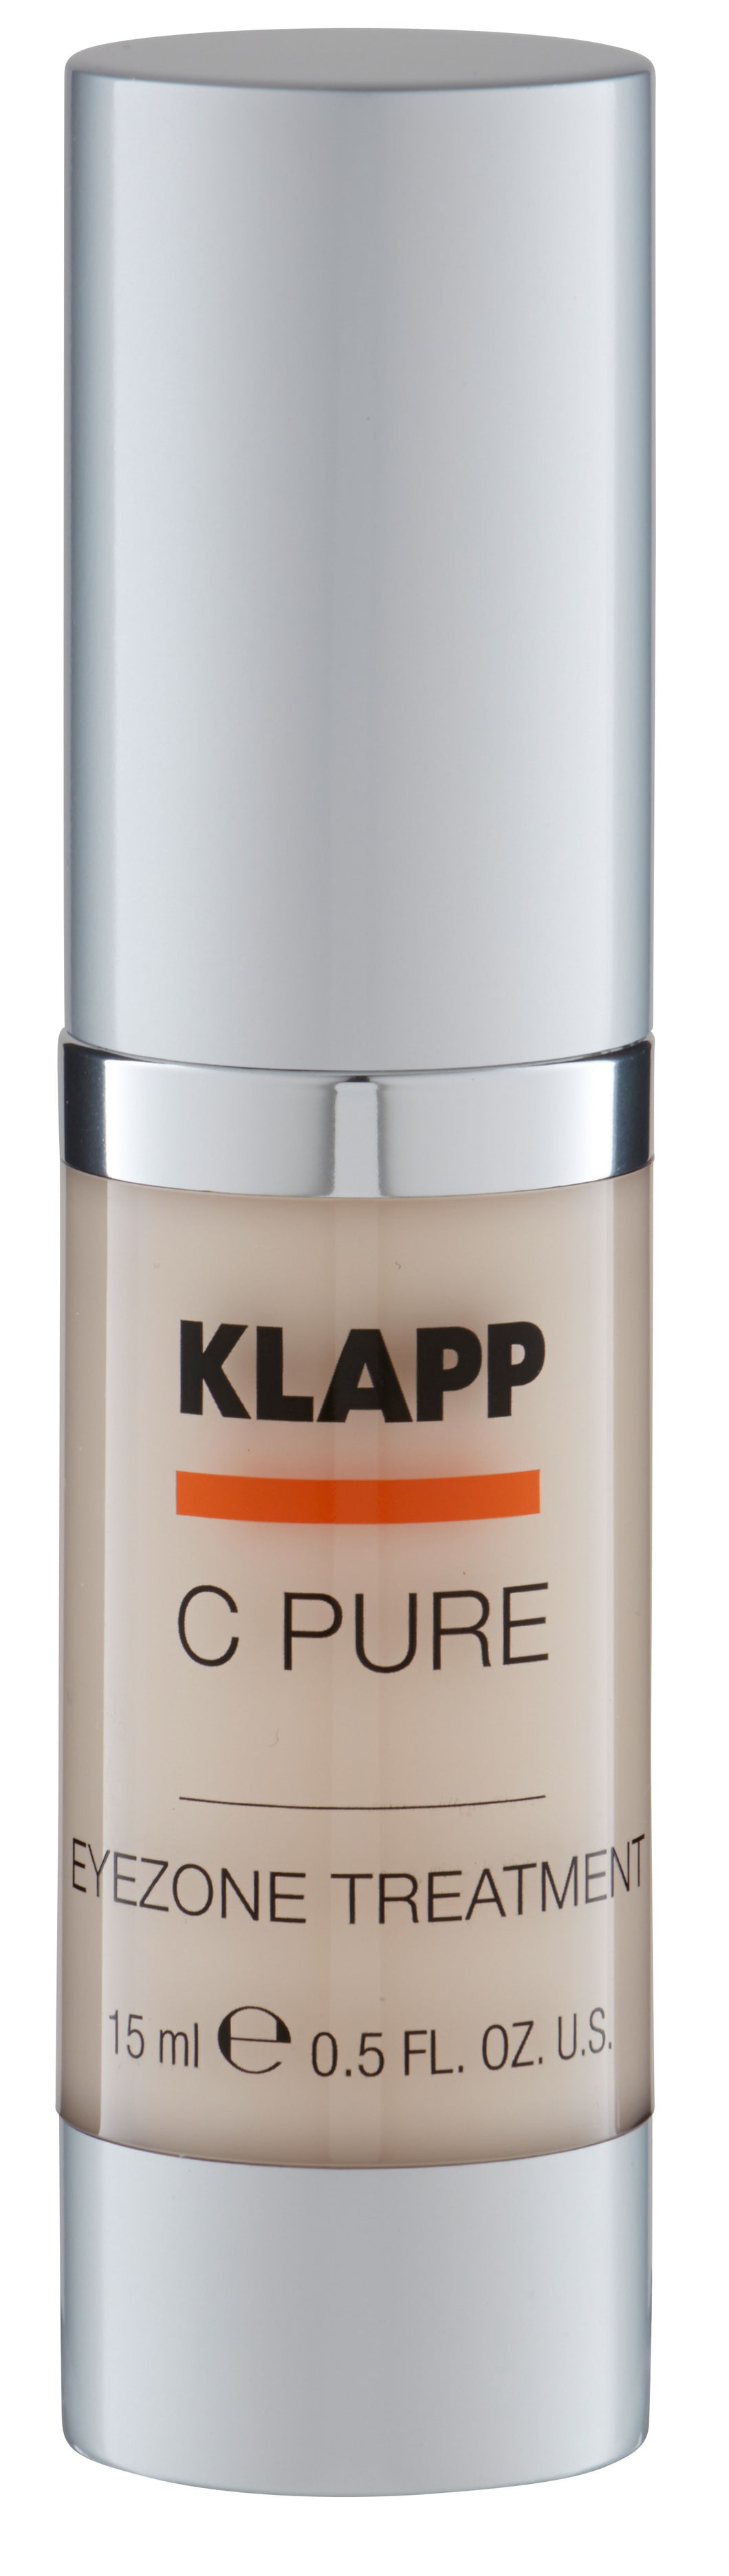 KLAPP C PURE Eyezone Treatment 15 ml